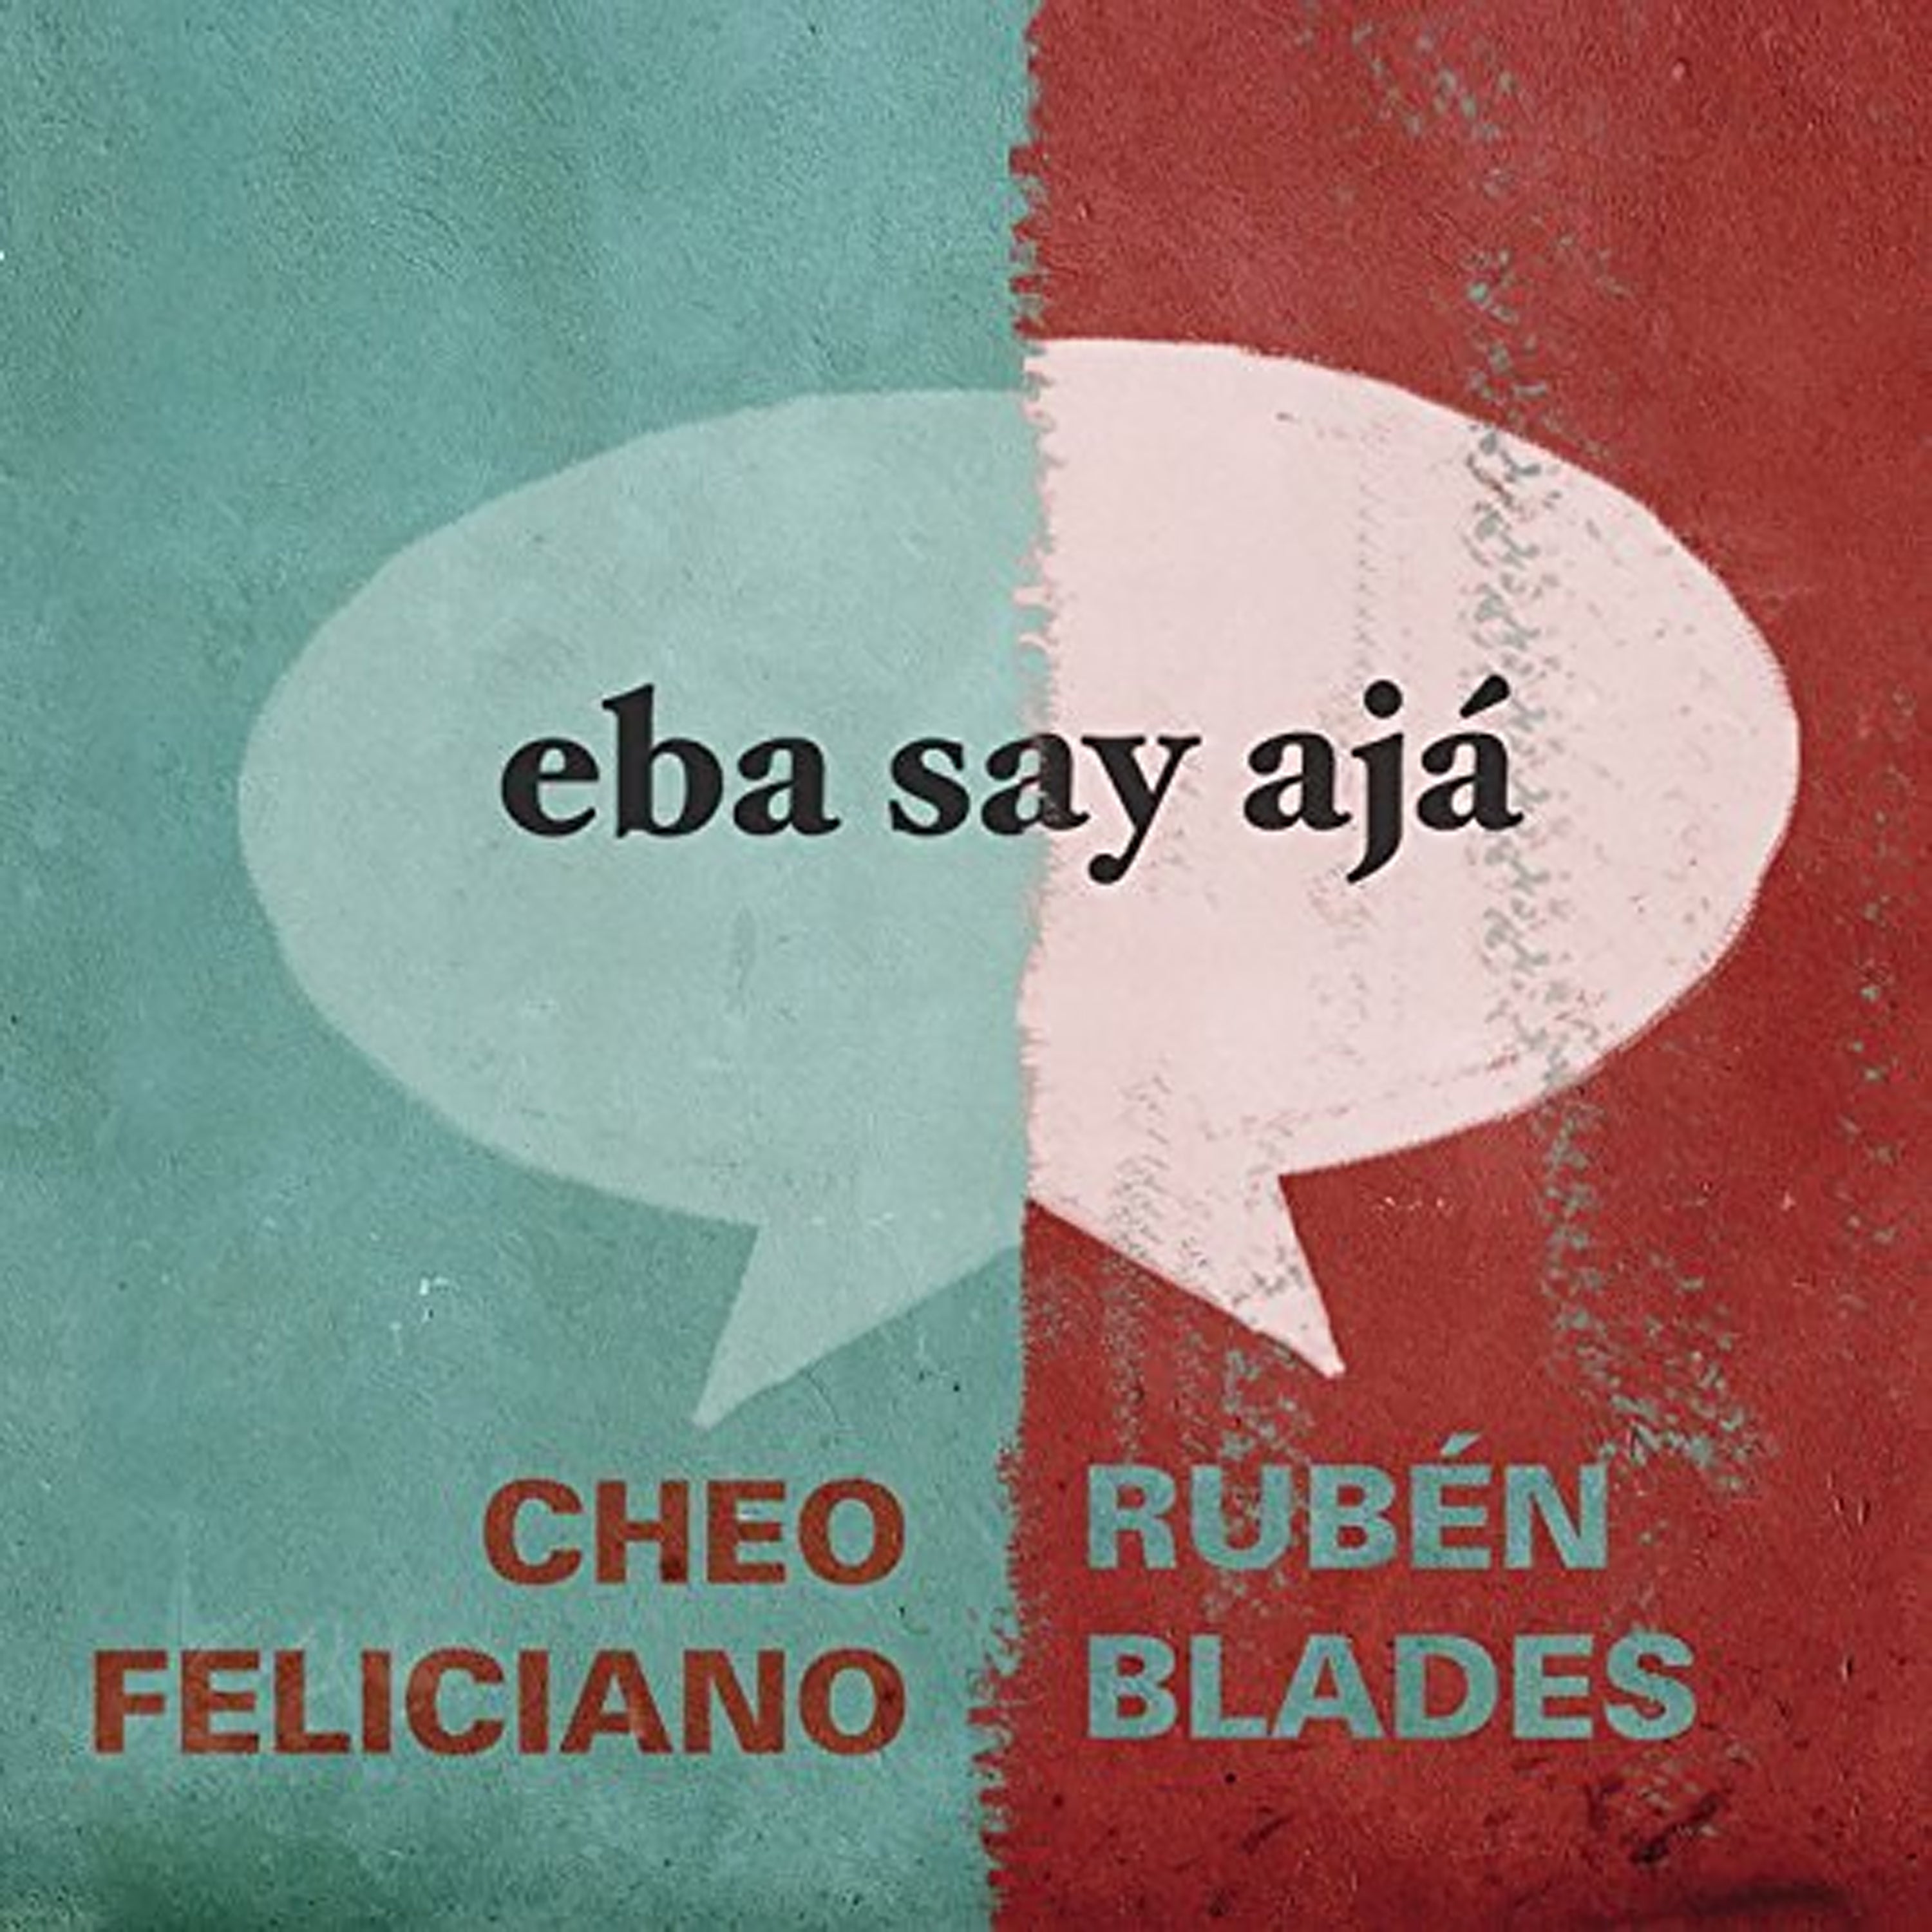 Rubén Blades & Cheo Feliciano - "Eba Say Ajá" | CD or Digital Download